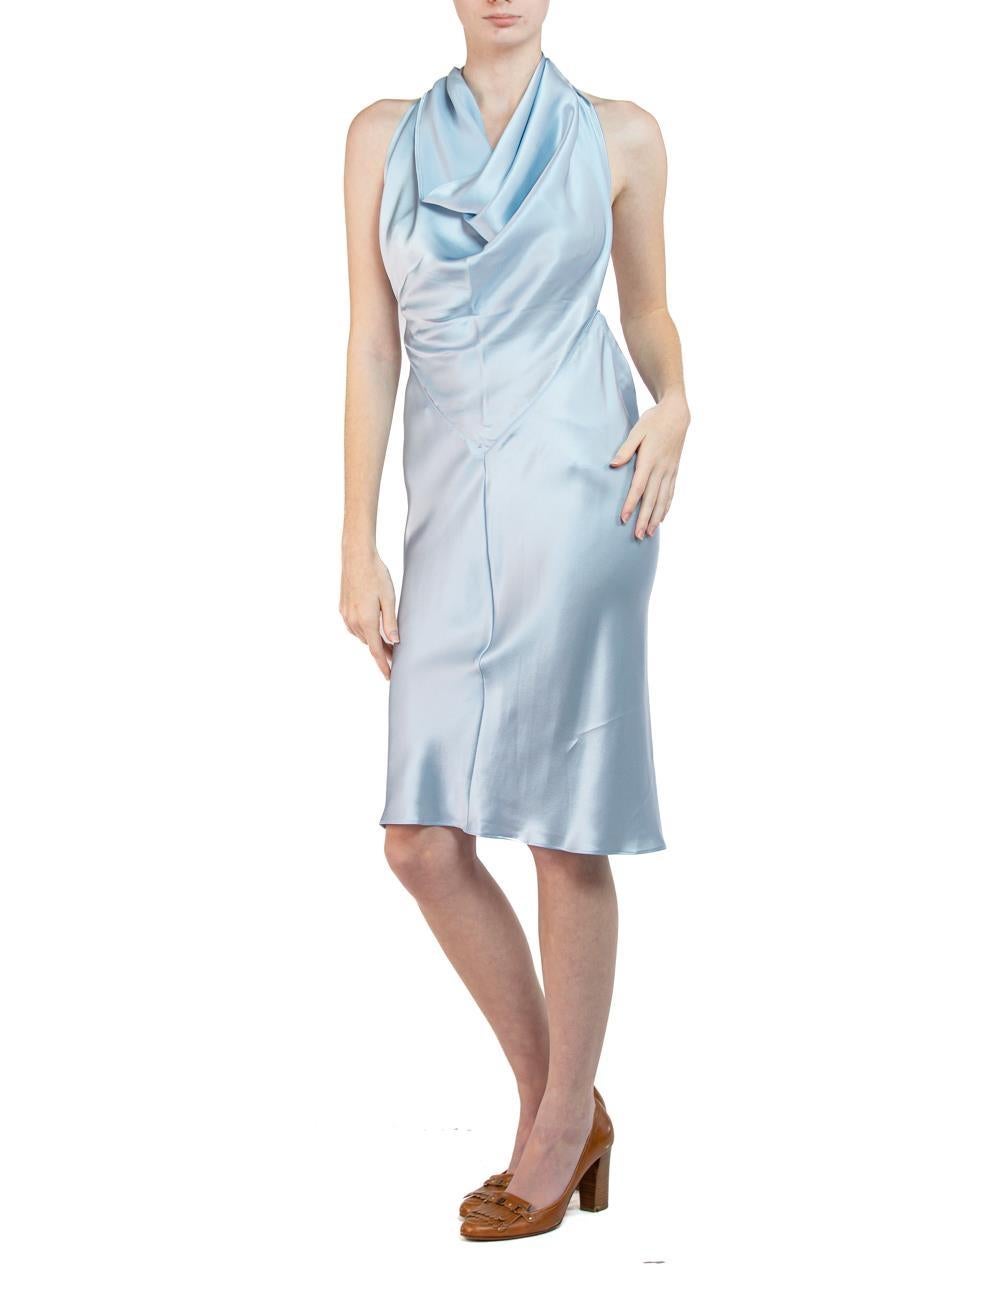 MORPHEW COLLECTION Ice Blue Silk Charmeuse Sagittarius Dress For Sale 3